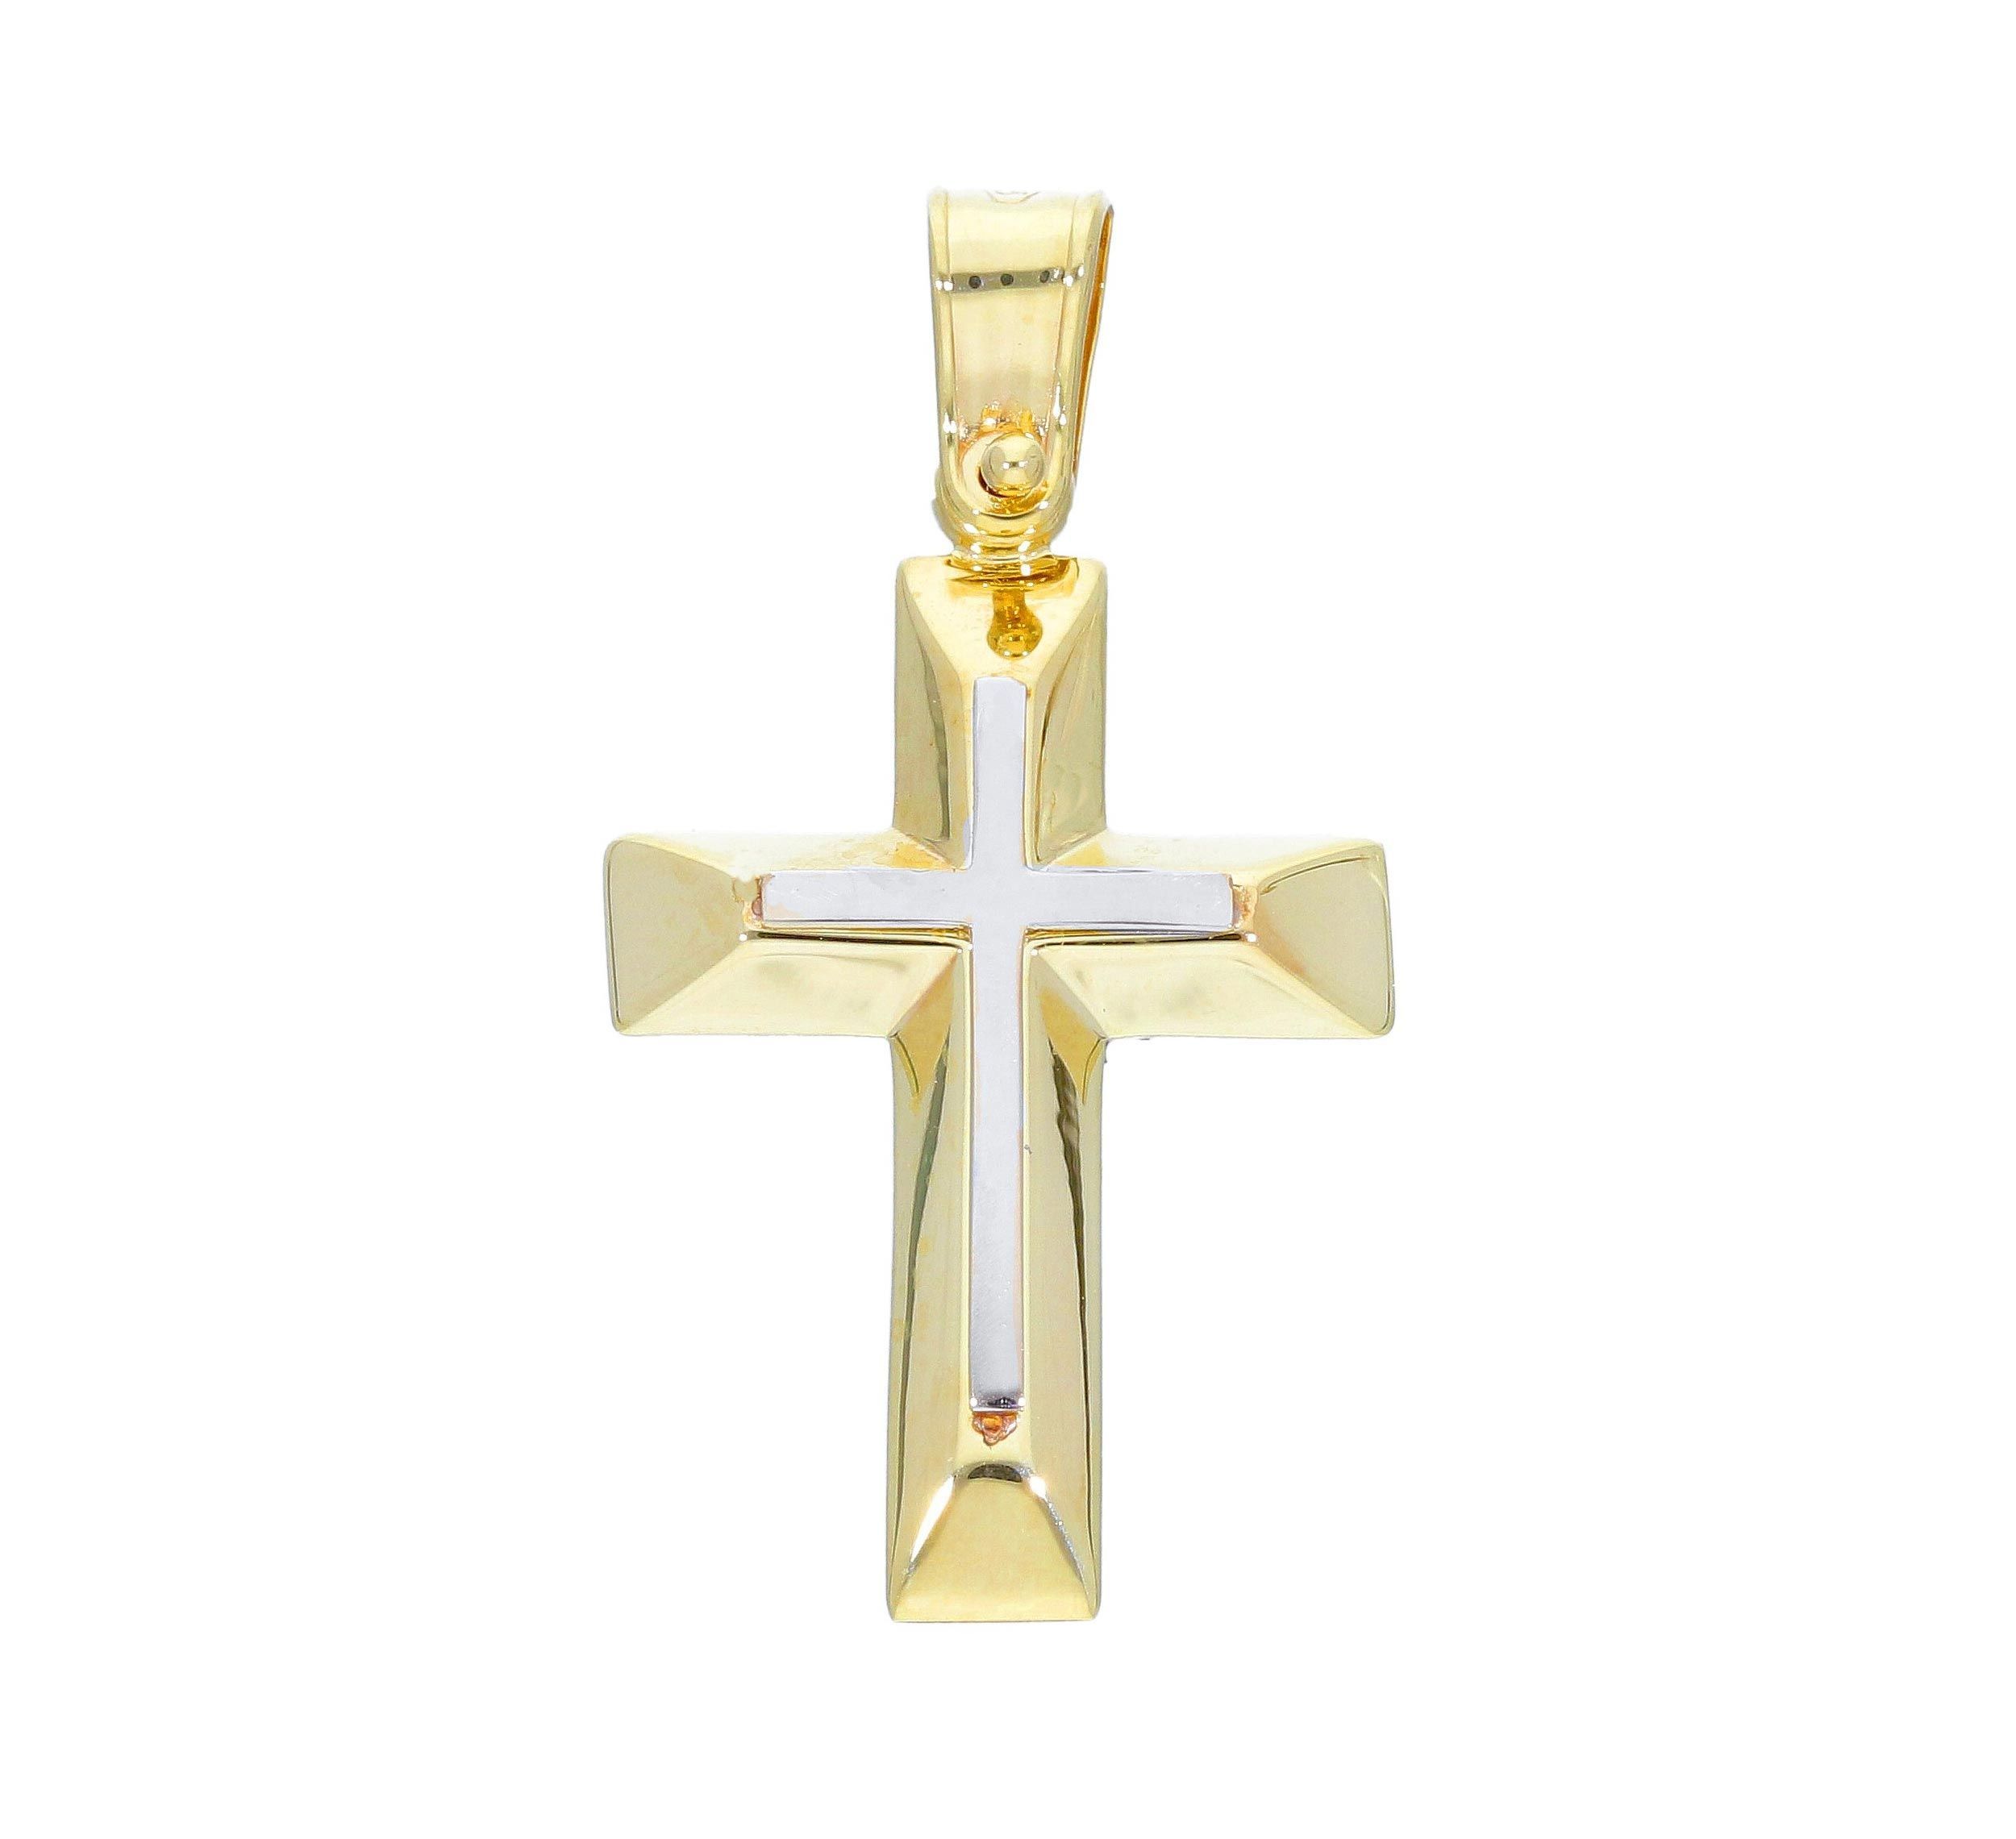 Golden cross k14 with white gold detail (code S242835)